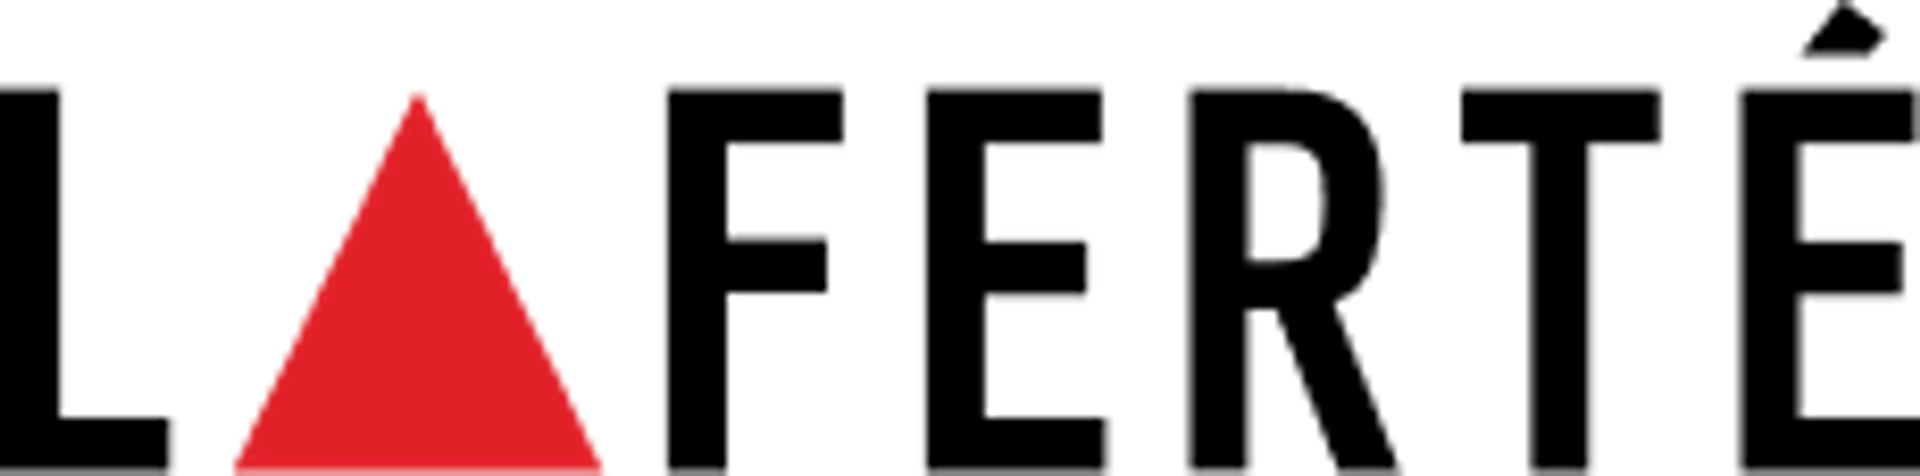 LAFERTÉ  logo de circulaire